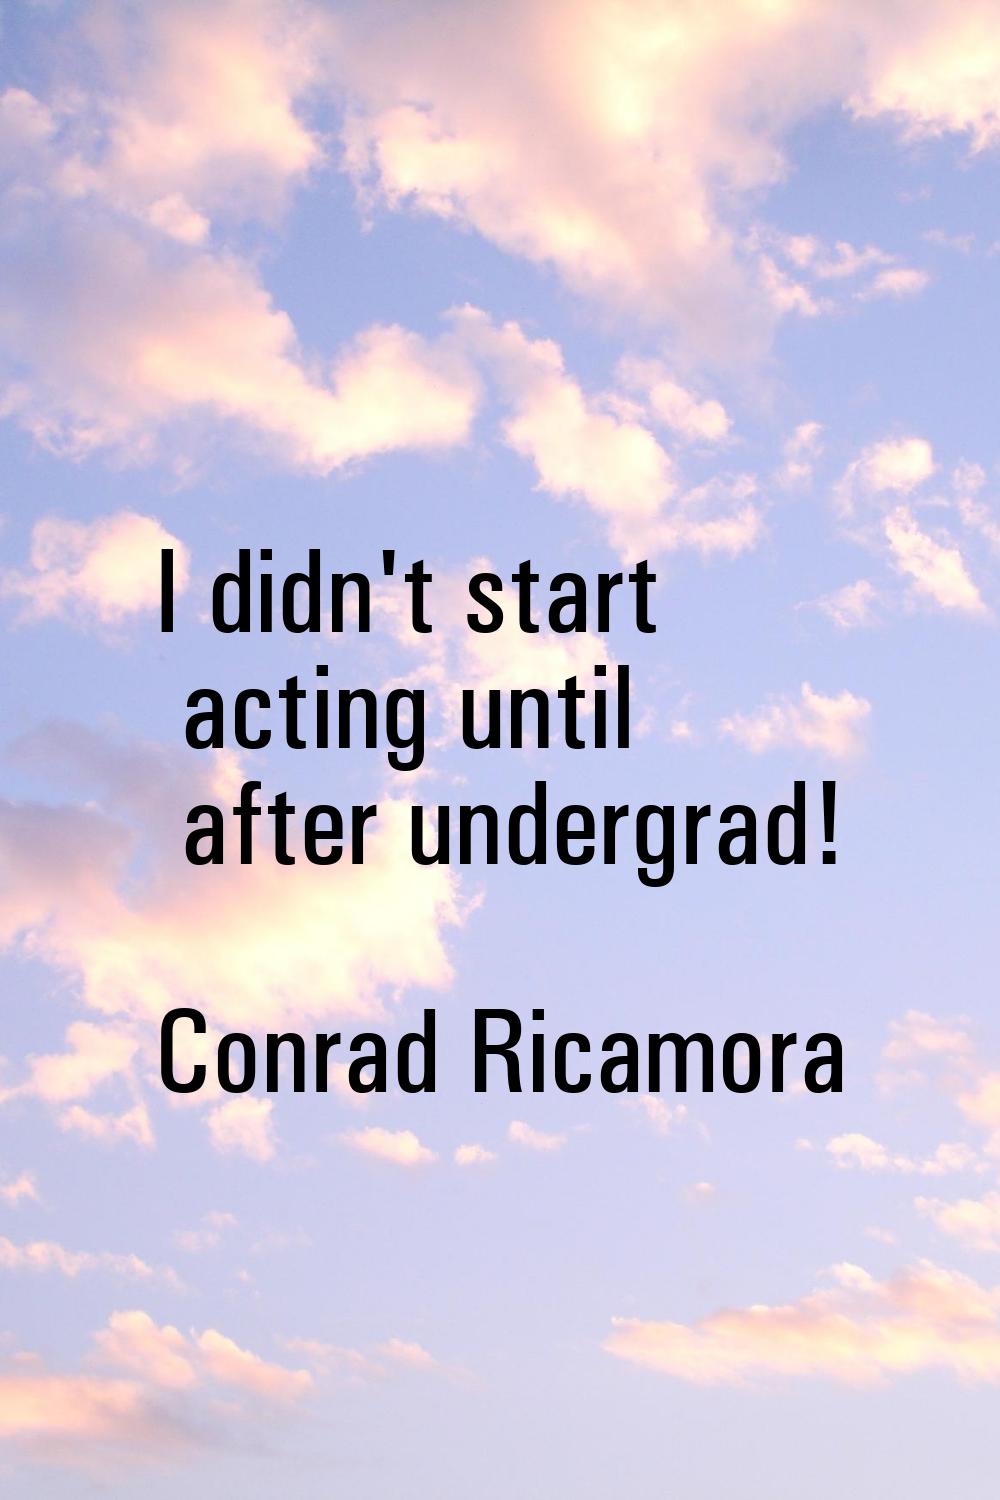 I didn't start acting until after undergrad!